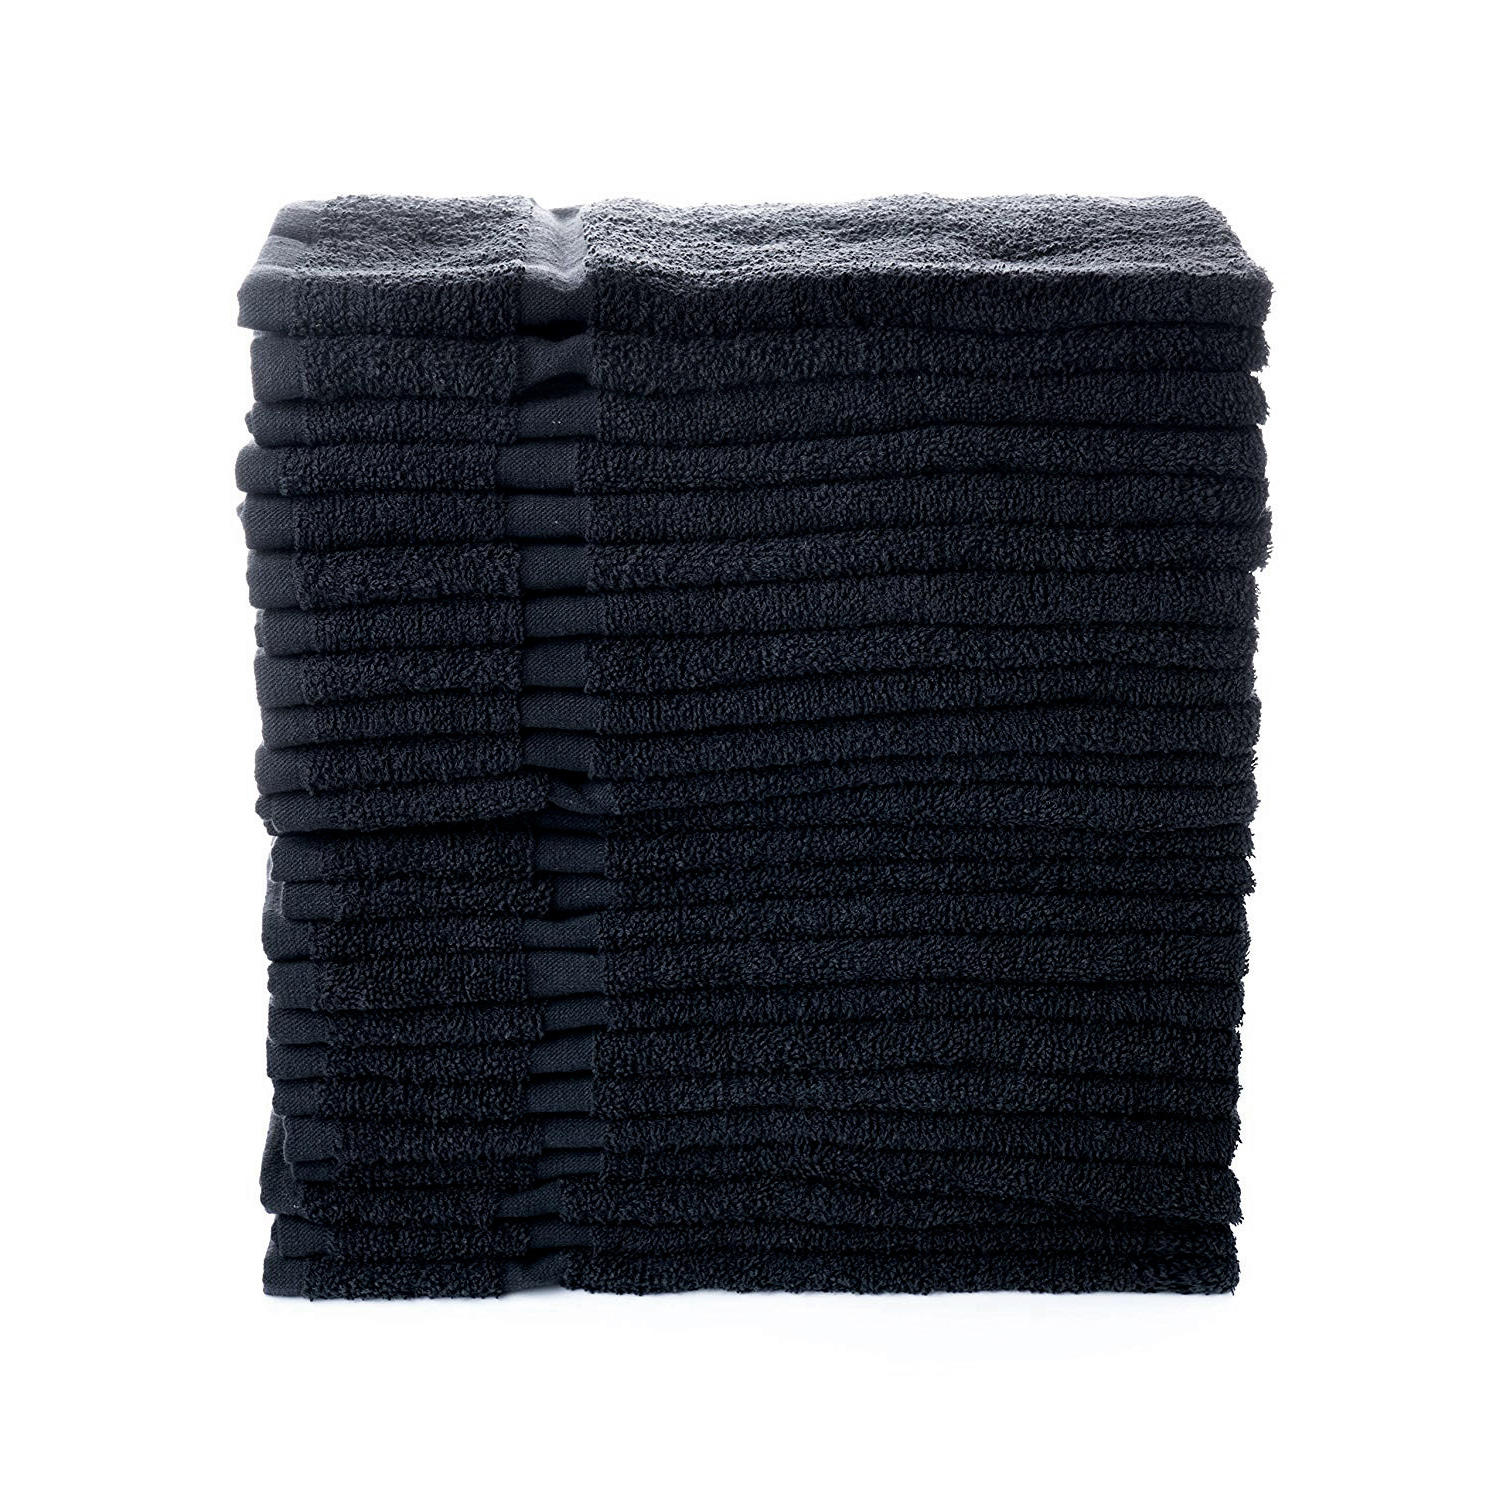 Hometex 100% Cotton Lightweight Hand Towels 12-pk. (16' x 27'), Black